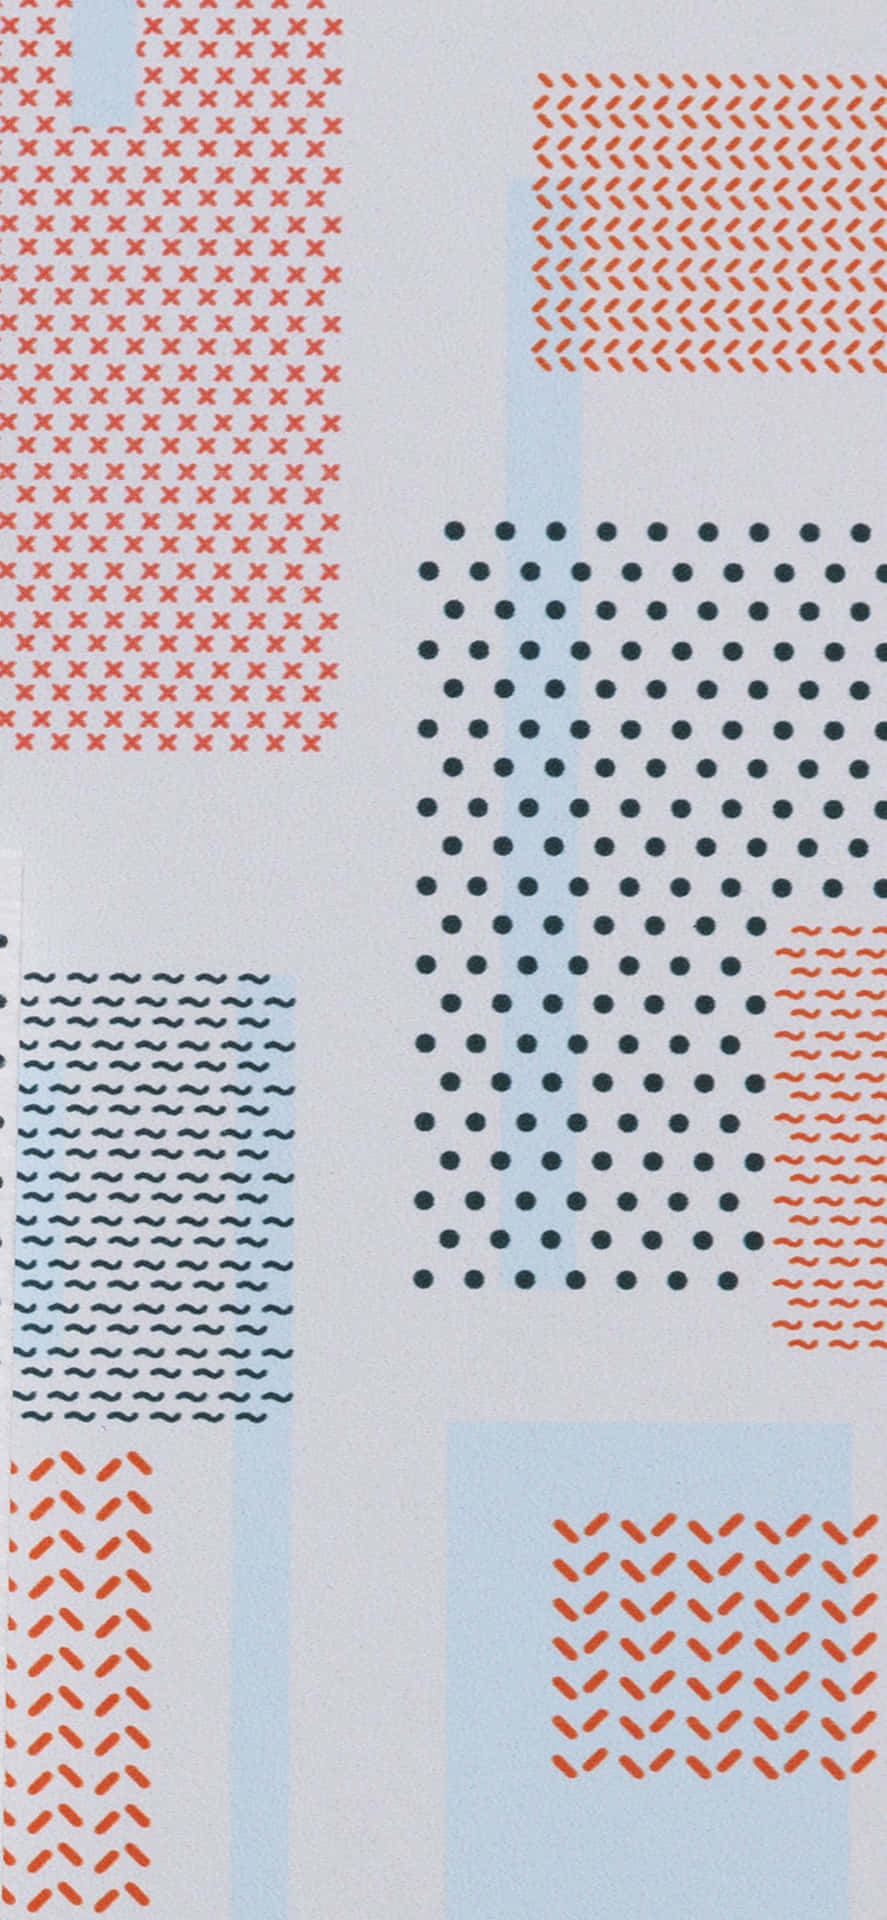 Elegant Simplicity: Monochrome Simple Pattern for iPhone Wallpaper